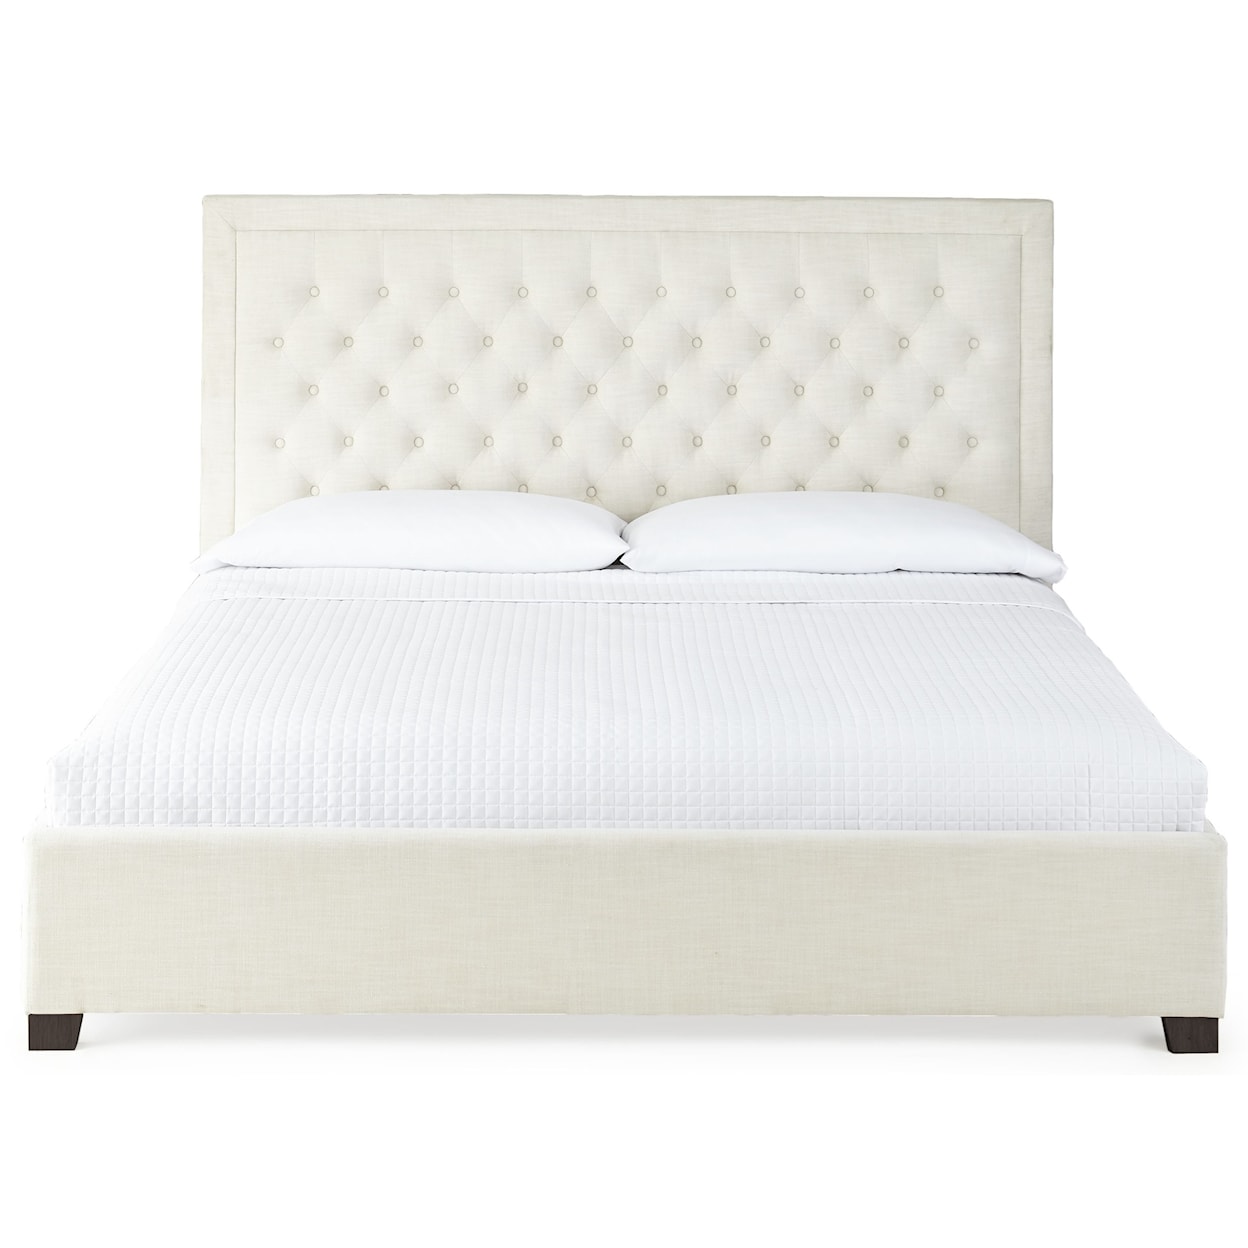 Steve Silver Isadora Queen Upholstered Bed